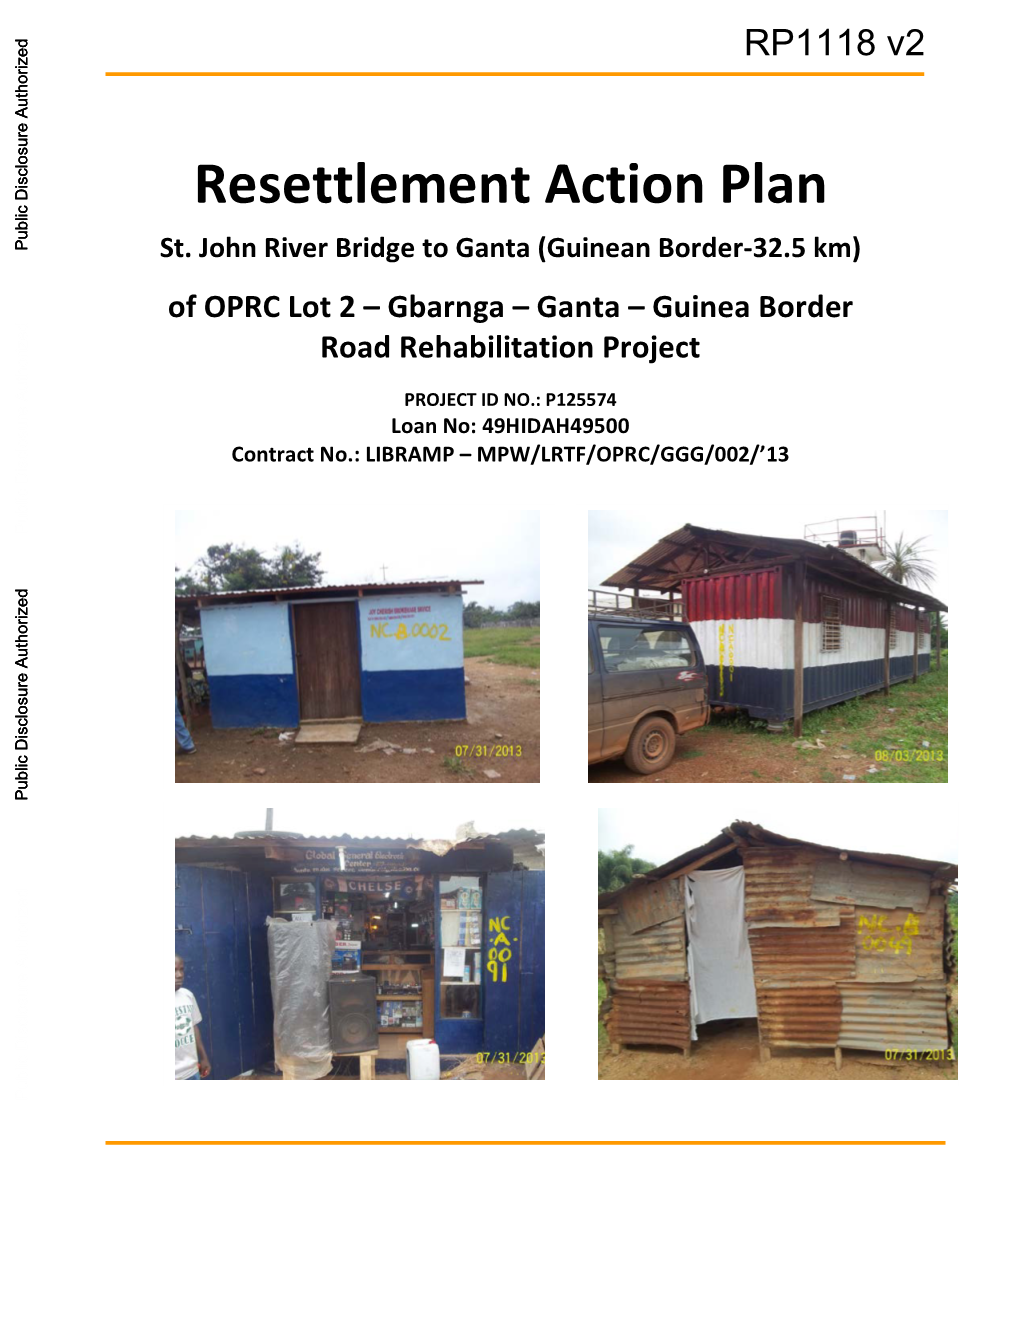 Ganta (Guinean Border-32.5 Km) of OPRC Lot 2 – Gbarnga – Ganta – Guinea Border Road Rehabilitation Project